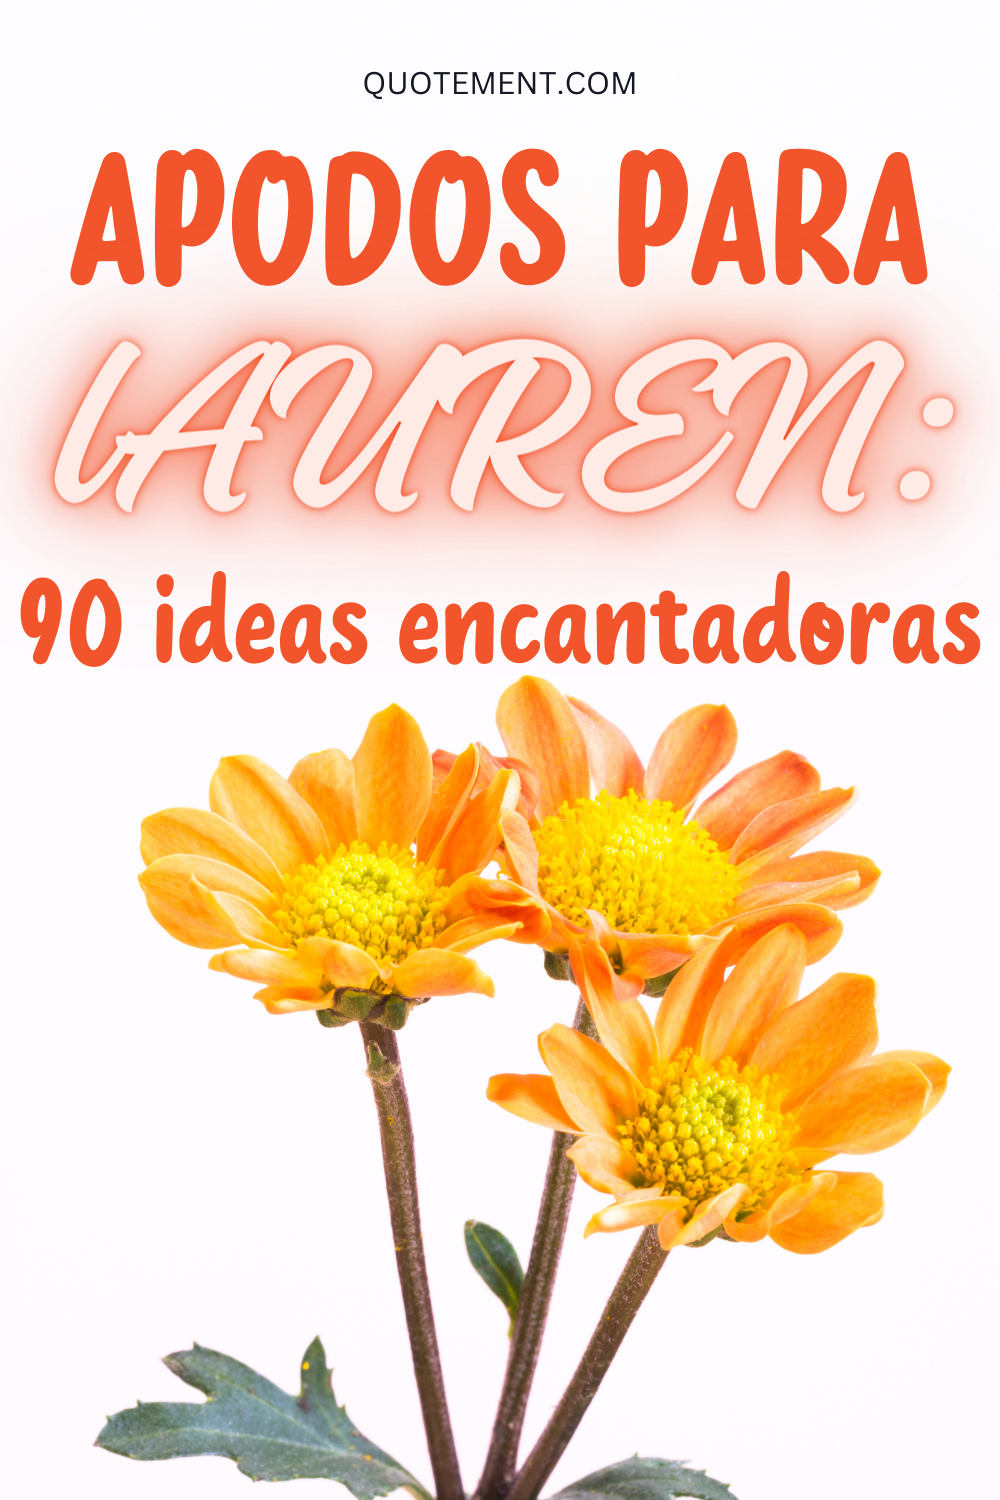 Apodos para Lauren 90 apodos adorables y divertidos